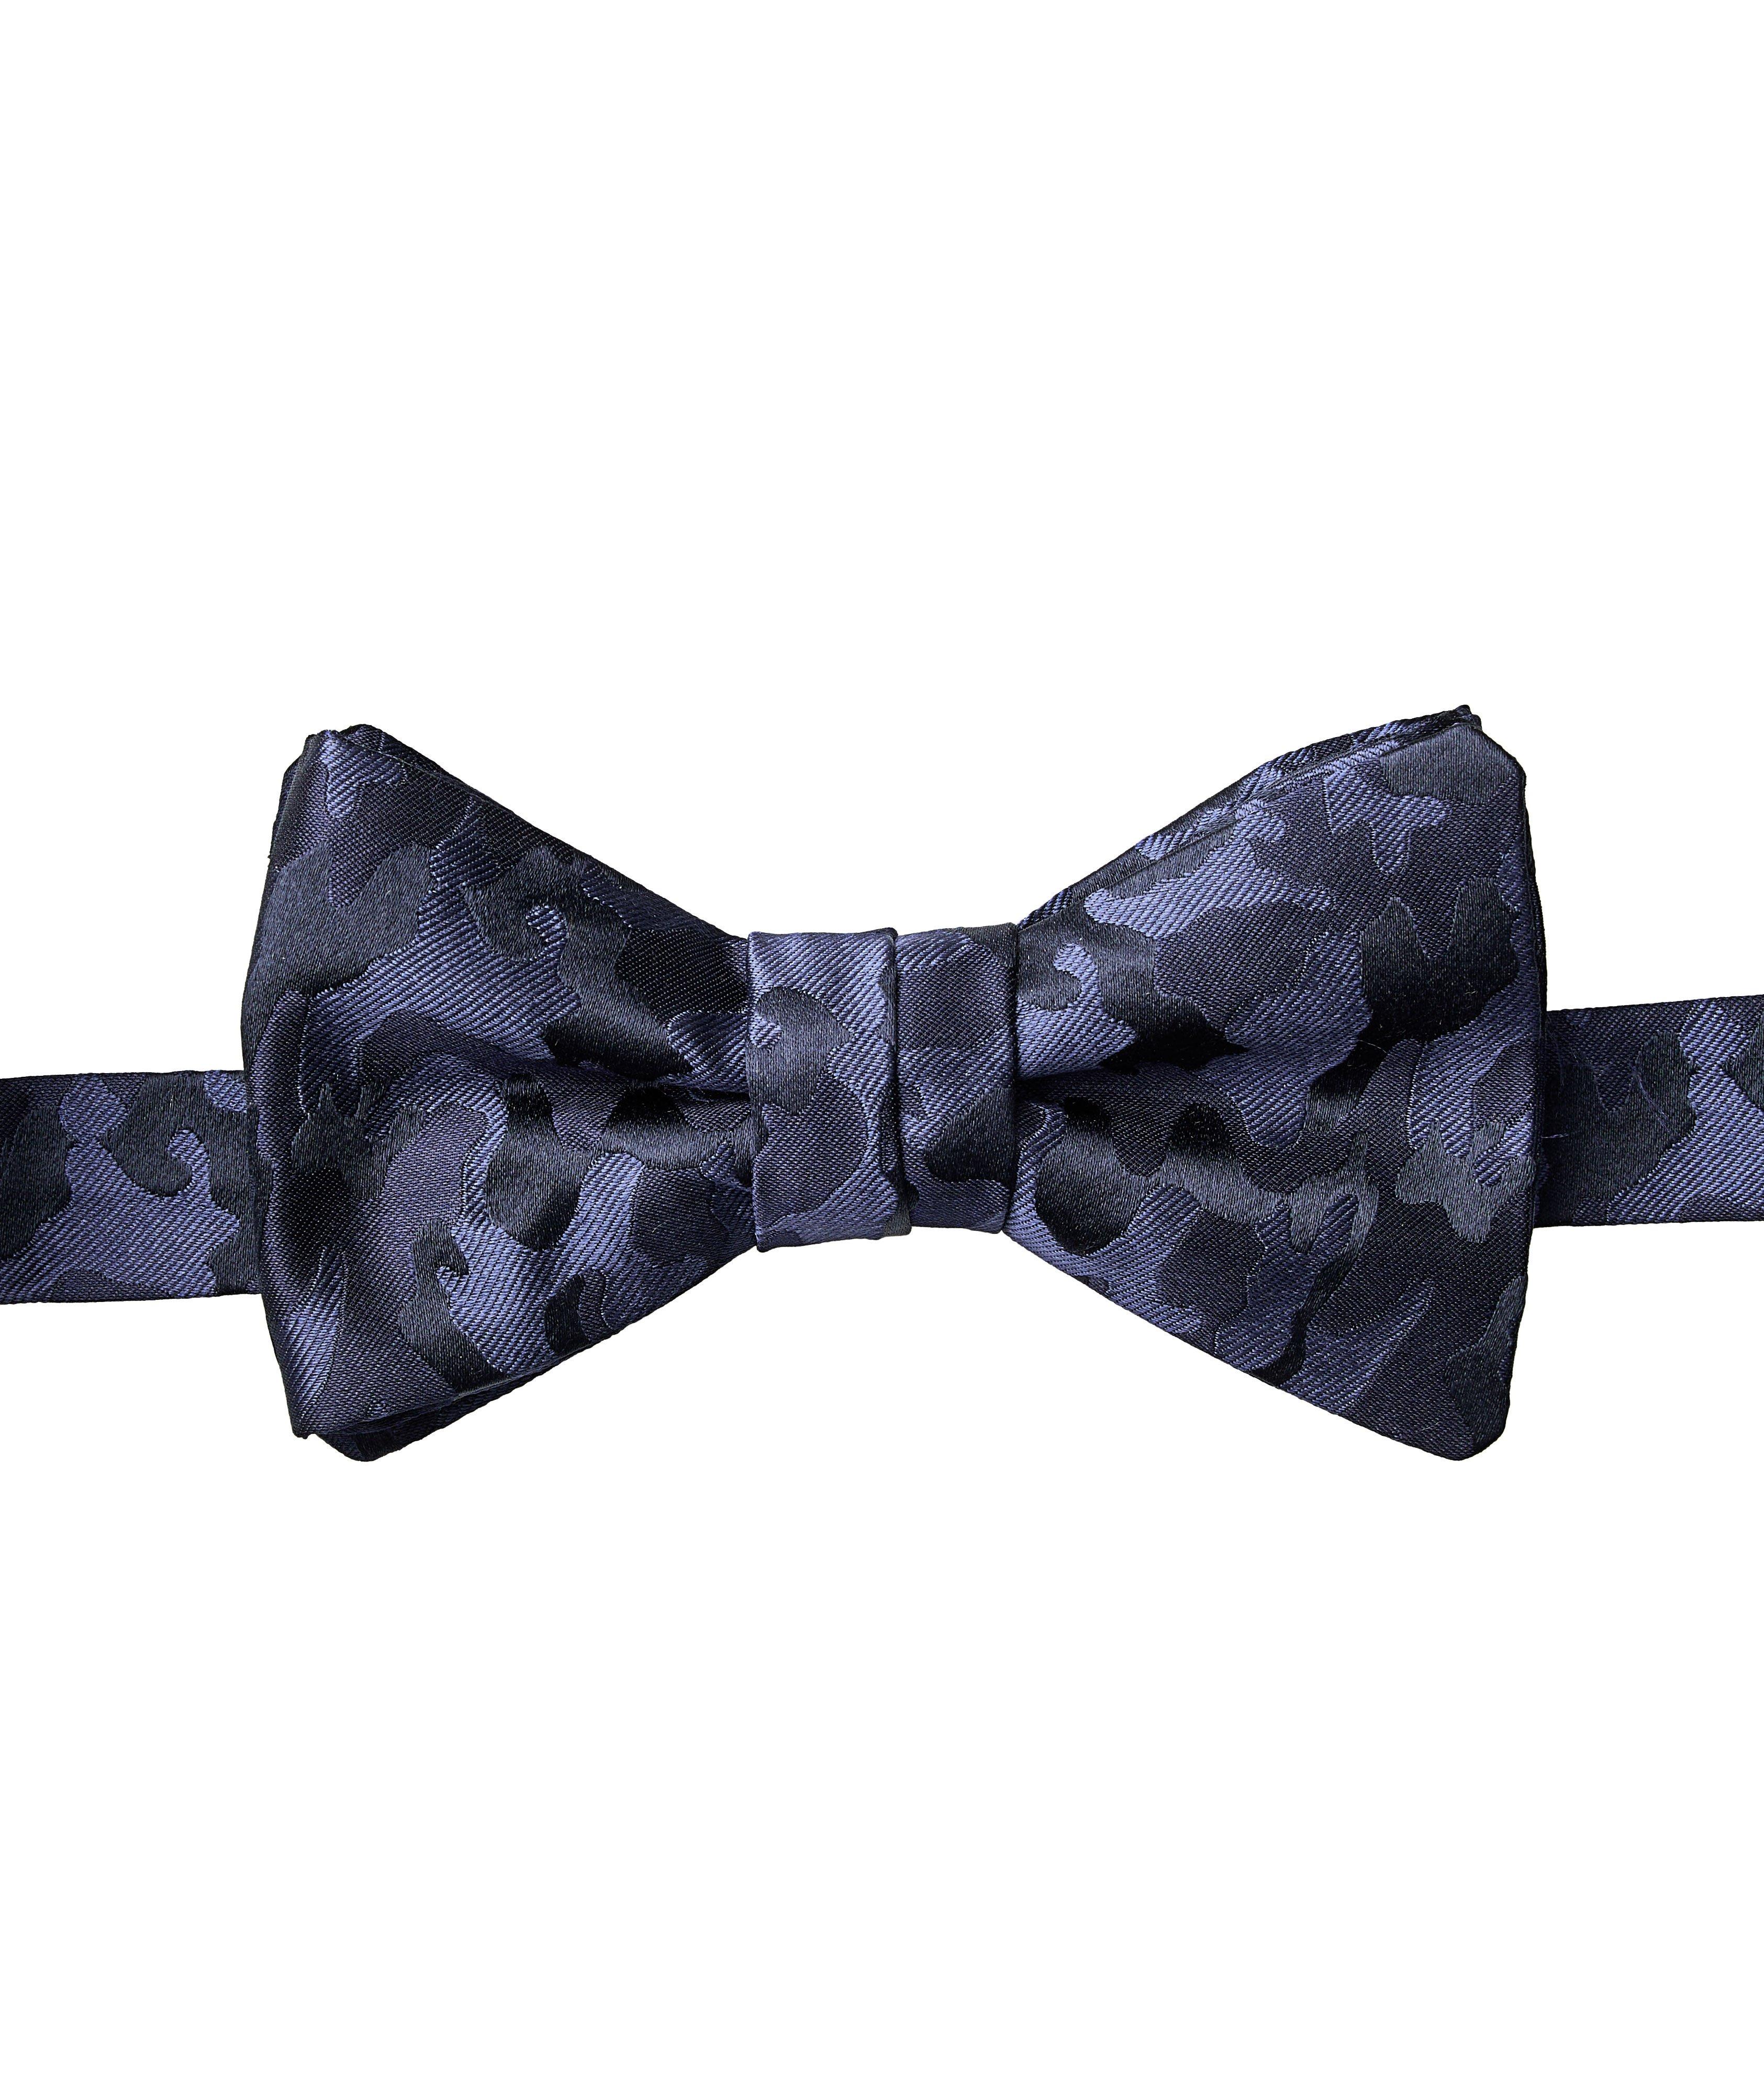 Camouflage Jacquard Silk Bow Tie image 0